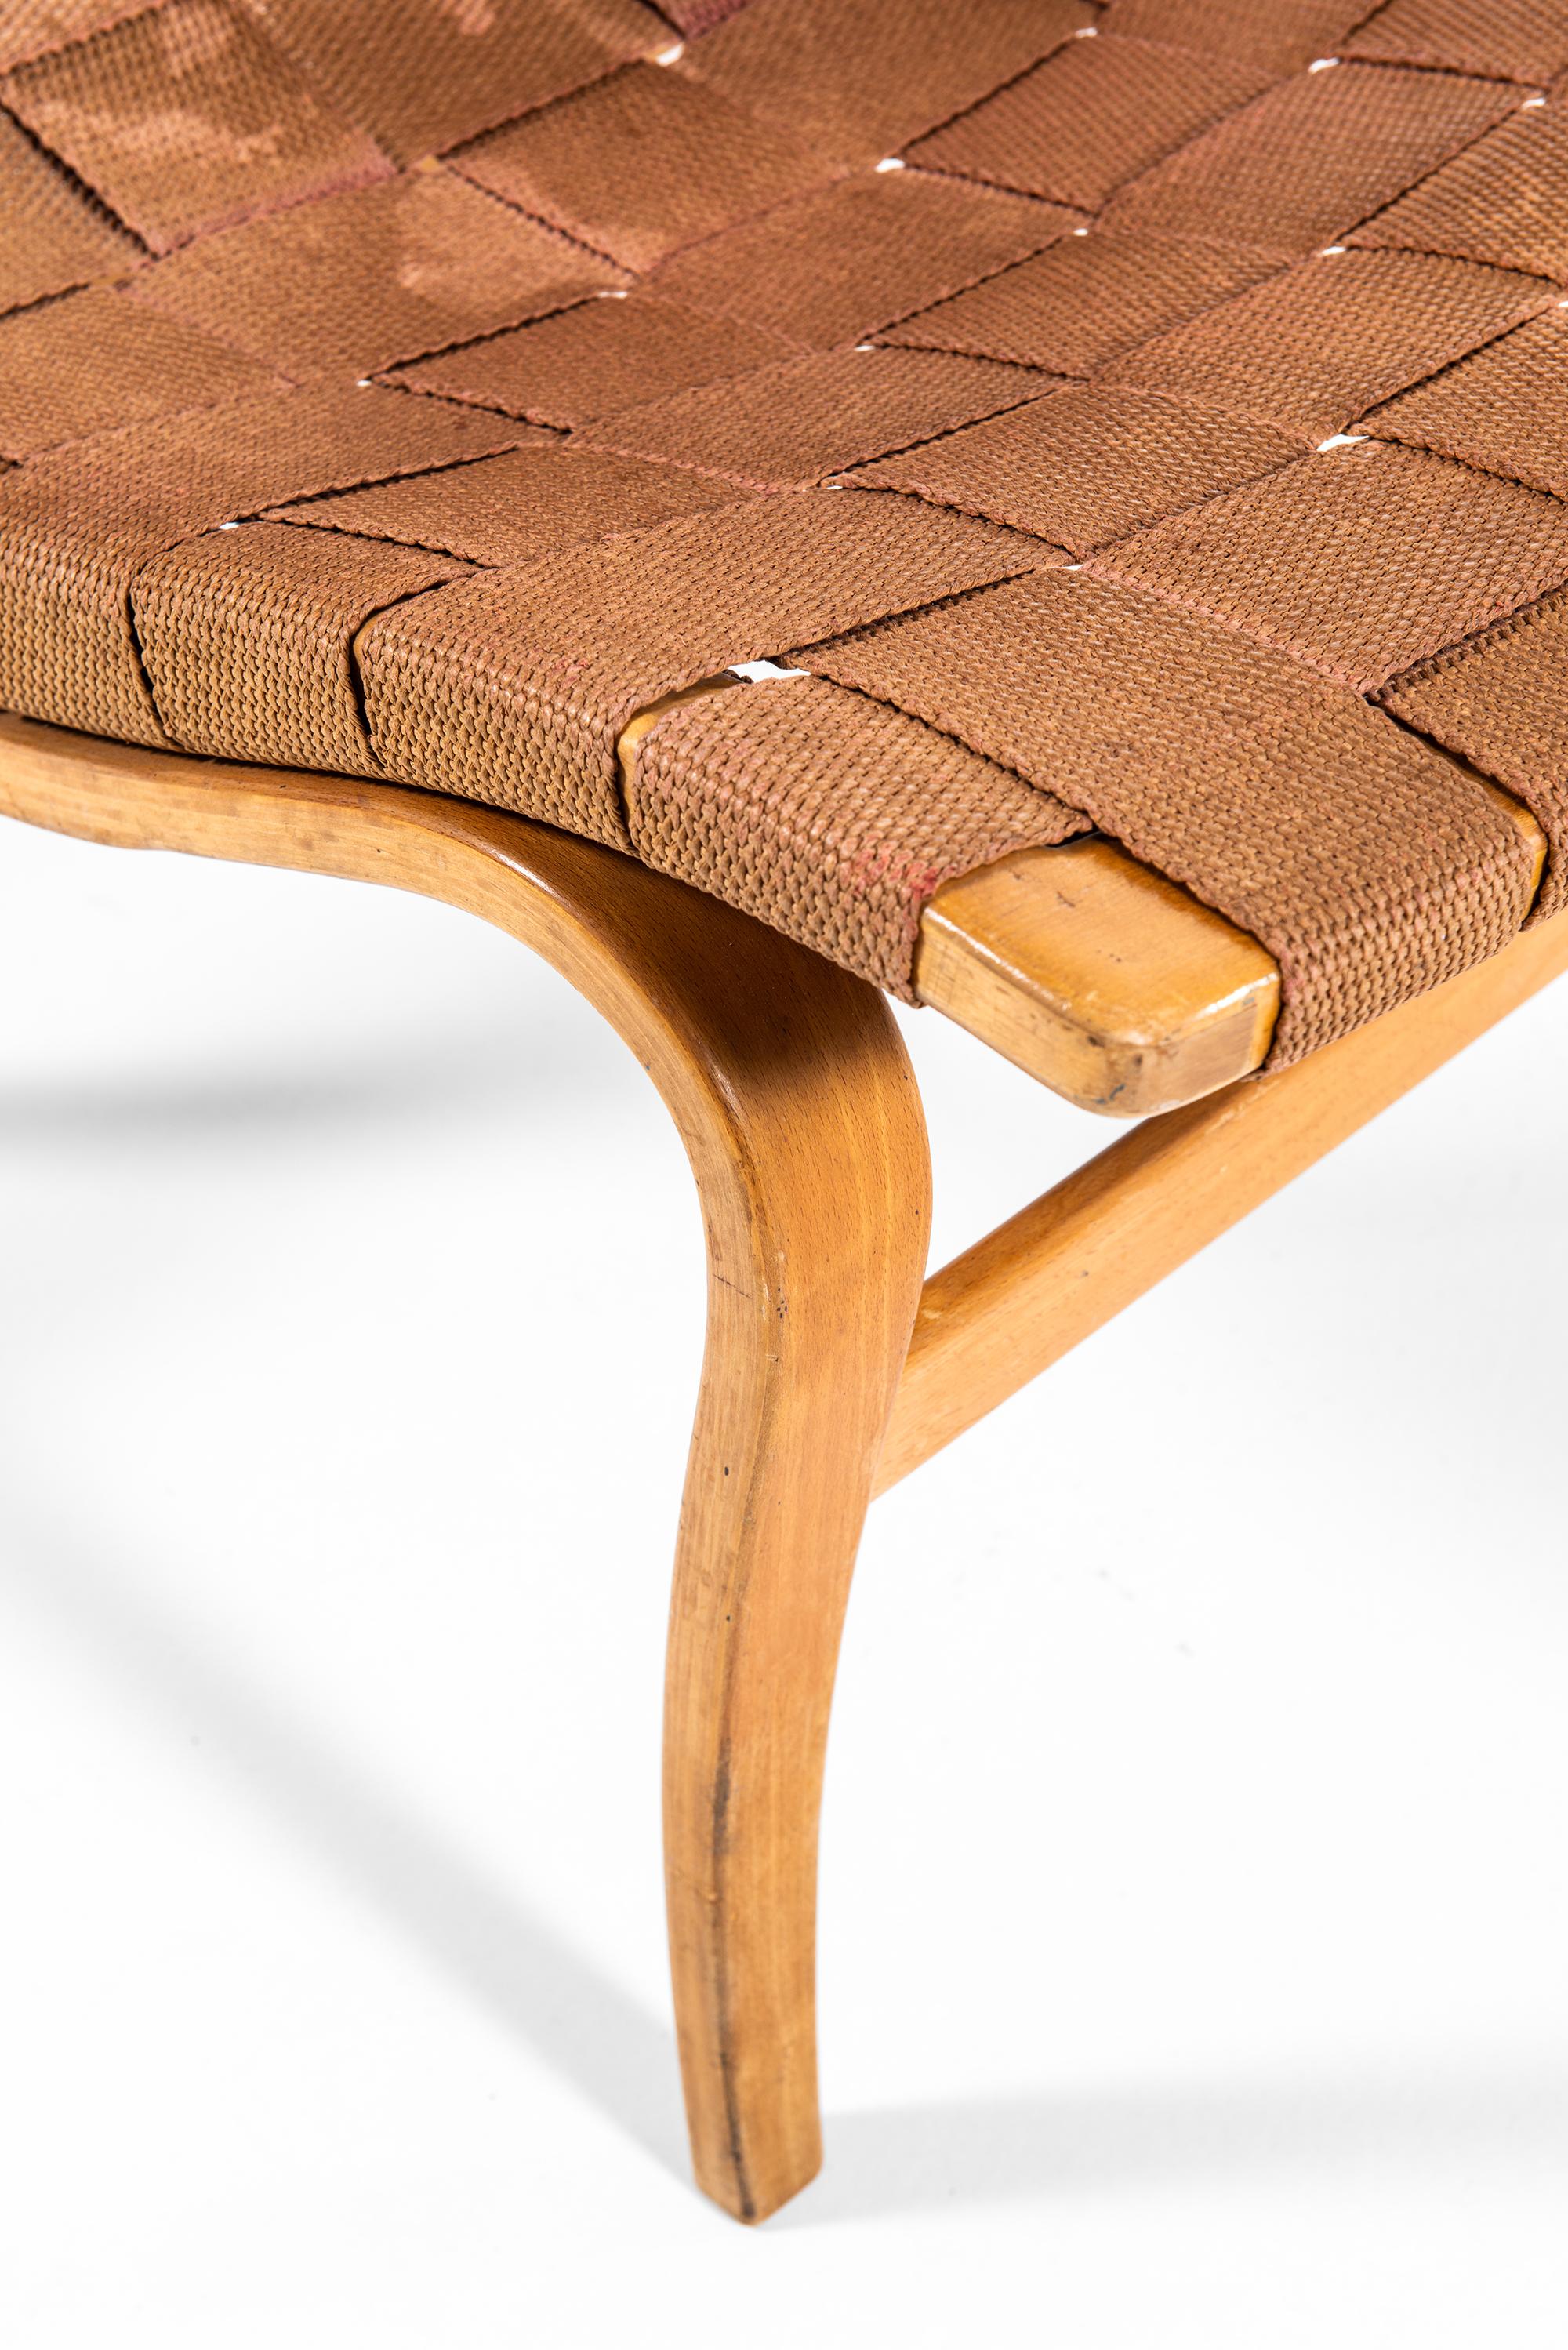 Early easy chair model Eva designed by Bruno Mathsson. Produced by Karl Mathsson in Värnamo, Sweden.